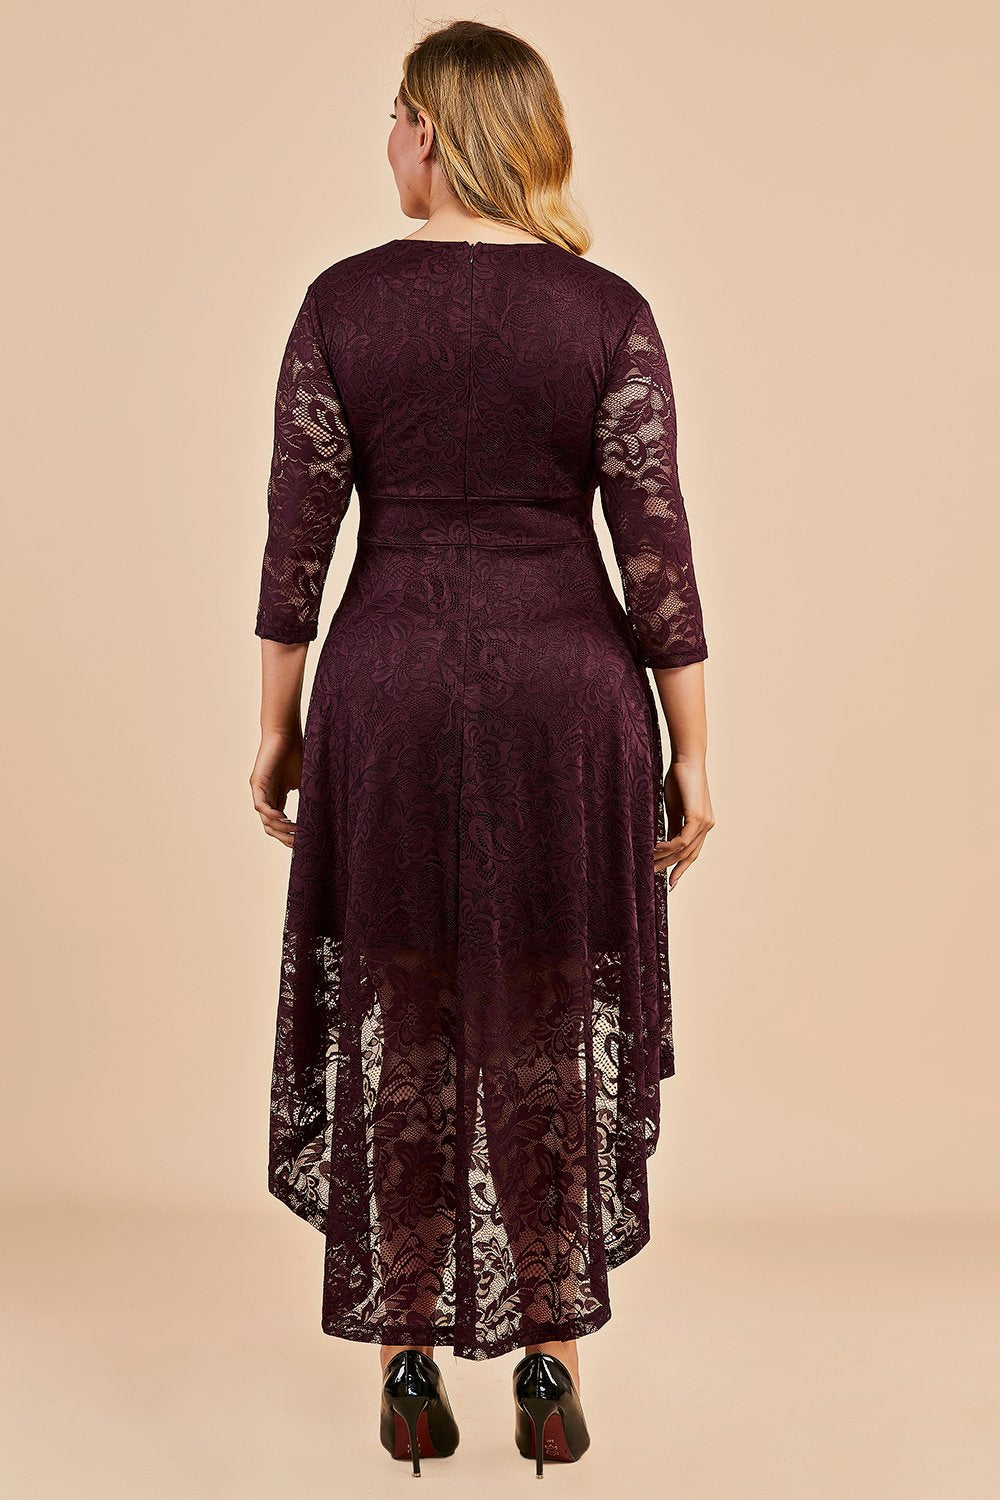 Burgundy High Low Plus Size Lace Dress